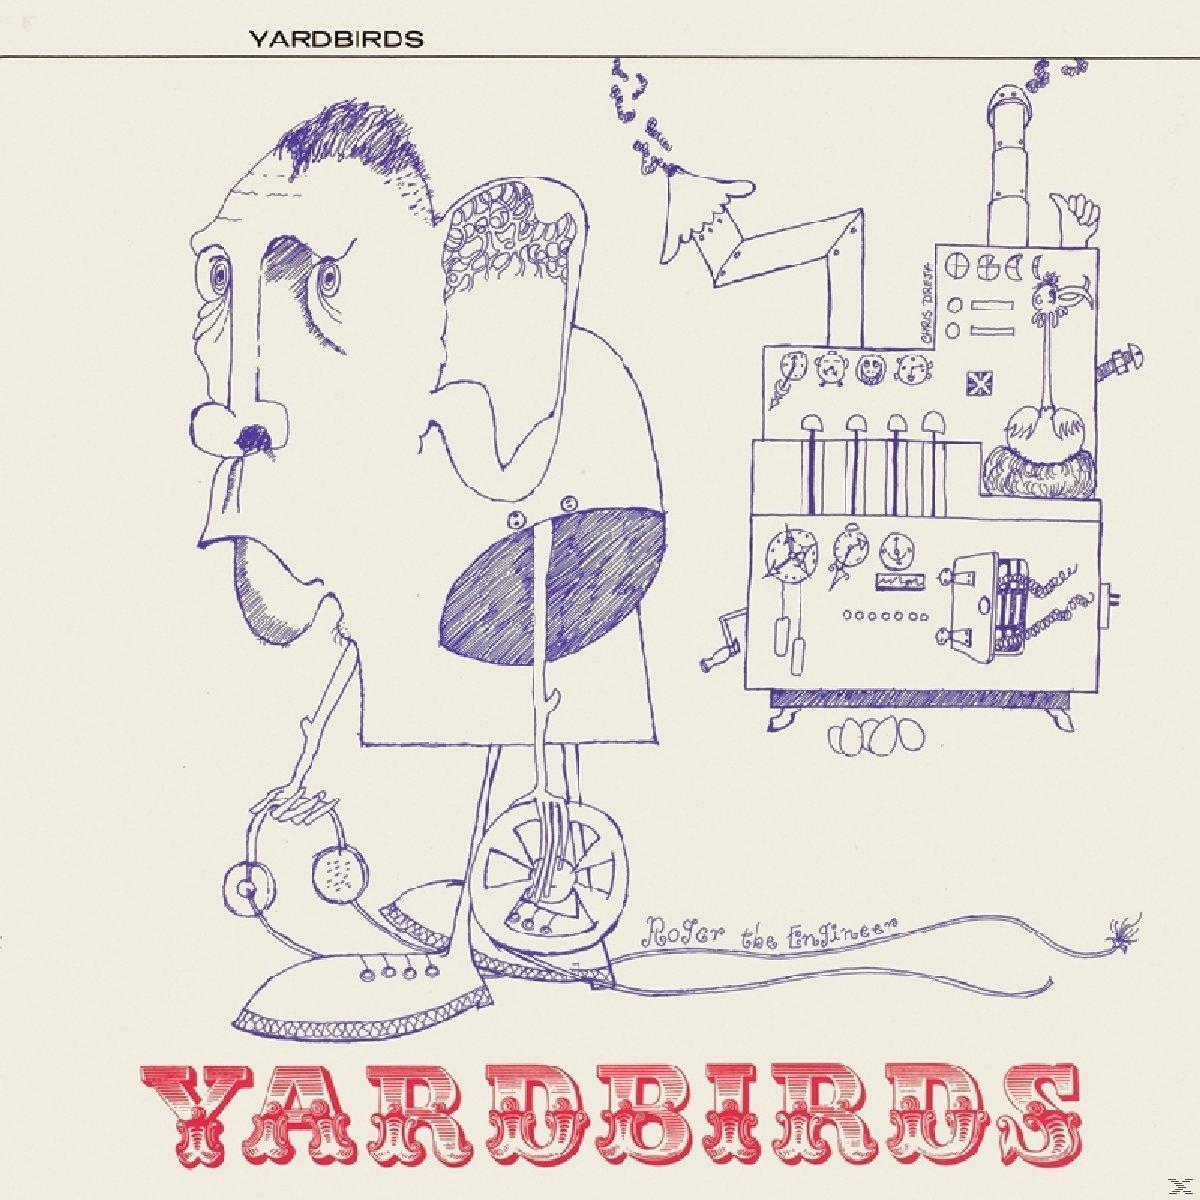 (Vinyl) - - Engineer Yardbirds Yardbirds-Roger The The